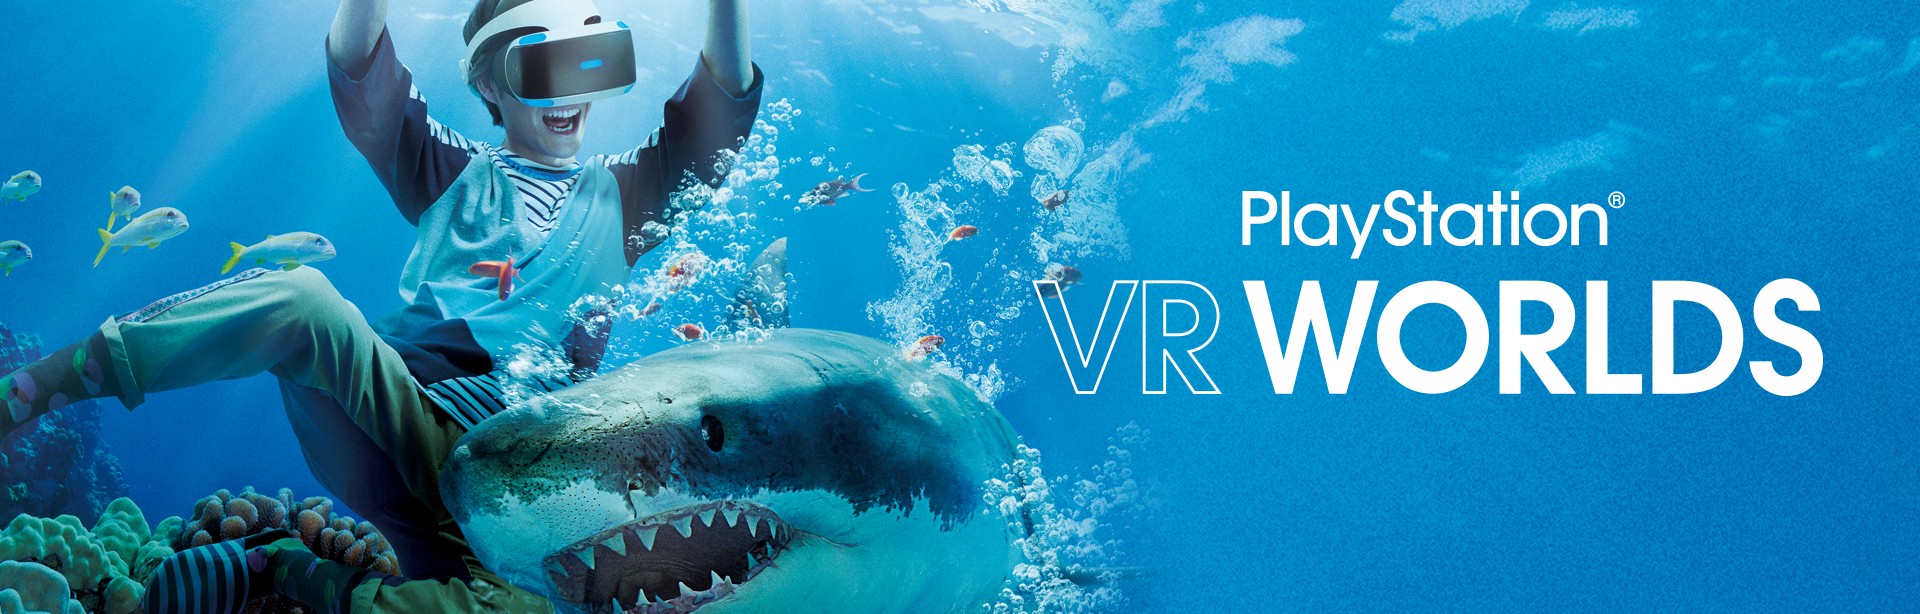 PlayStation VR WORLDS バナー画像